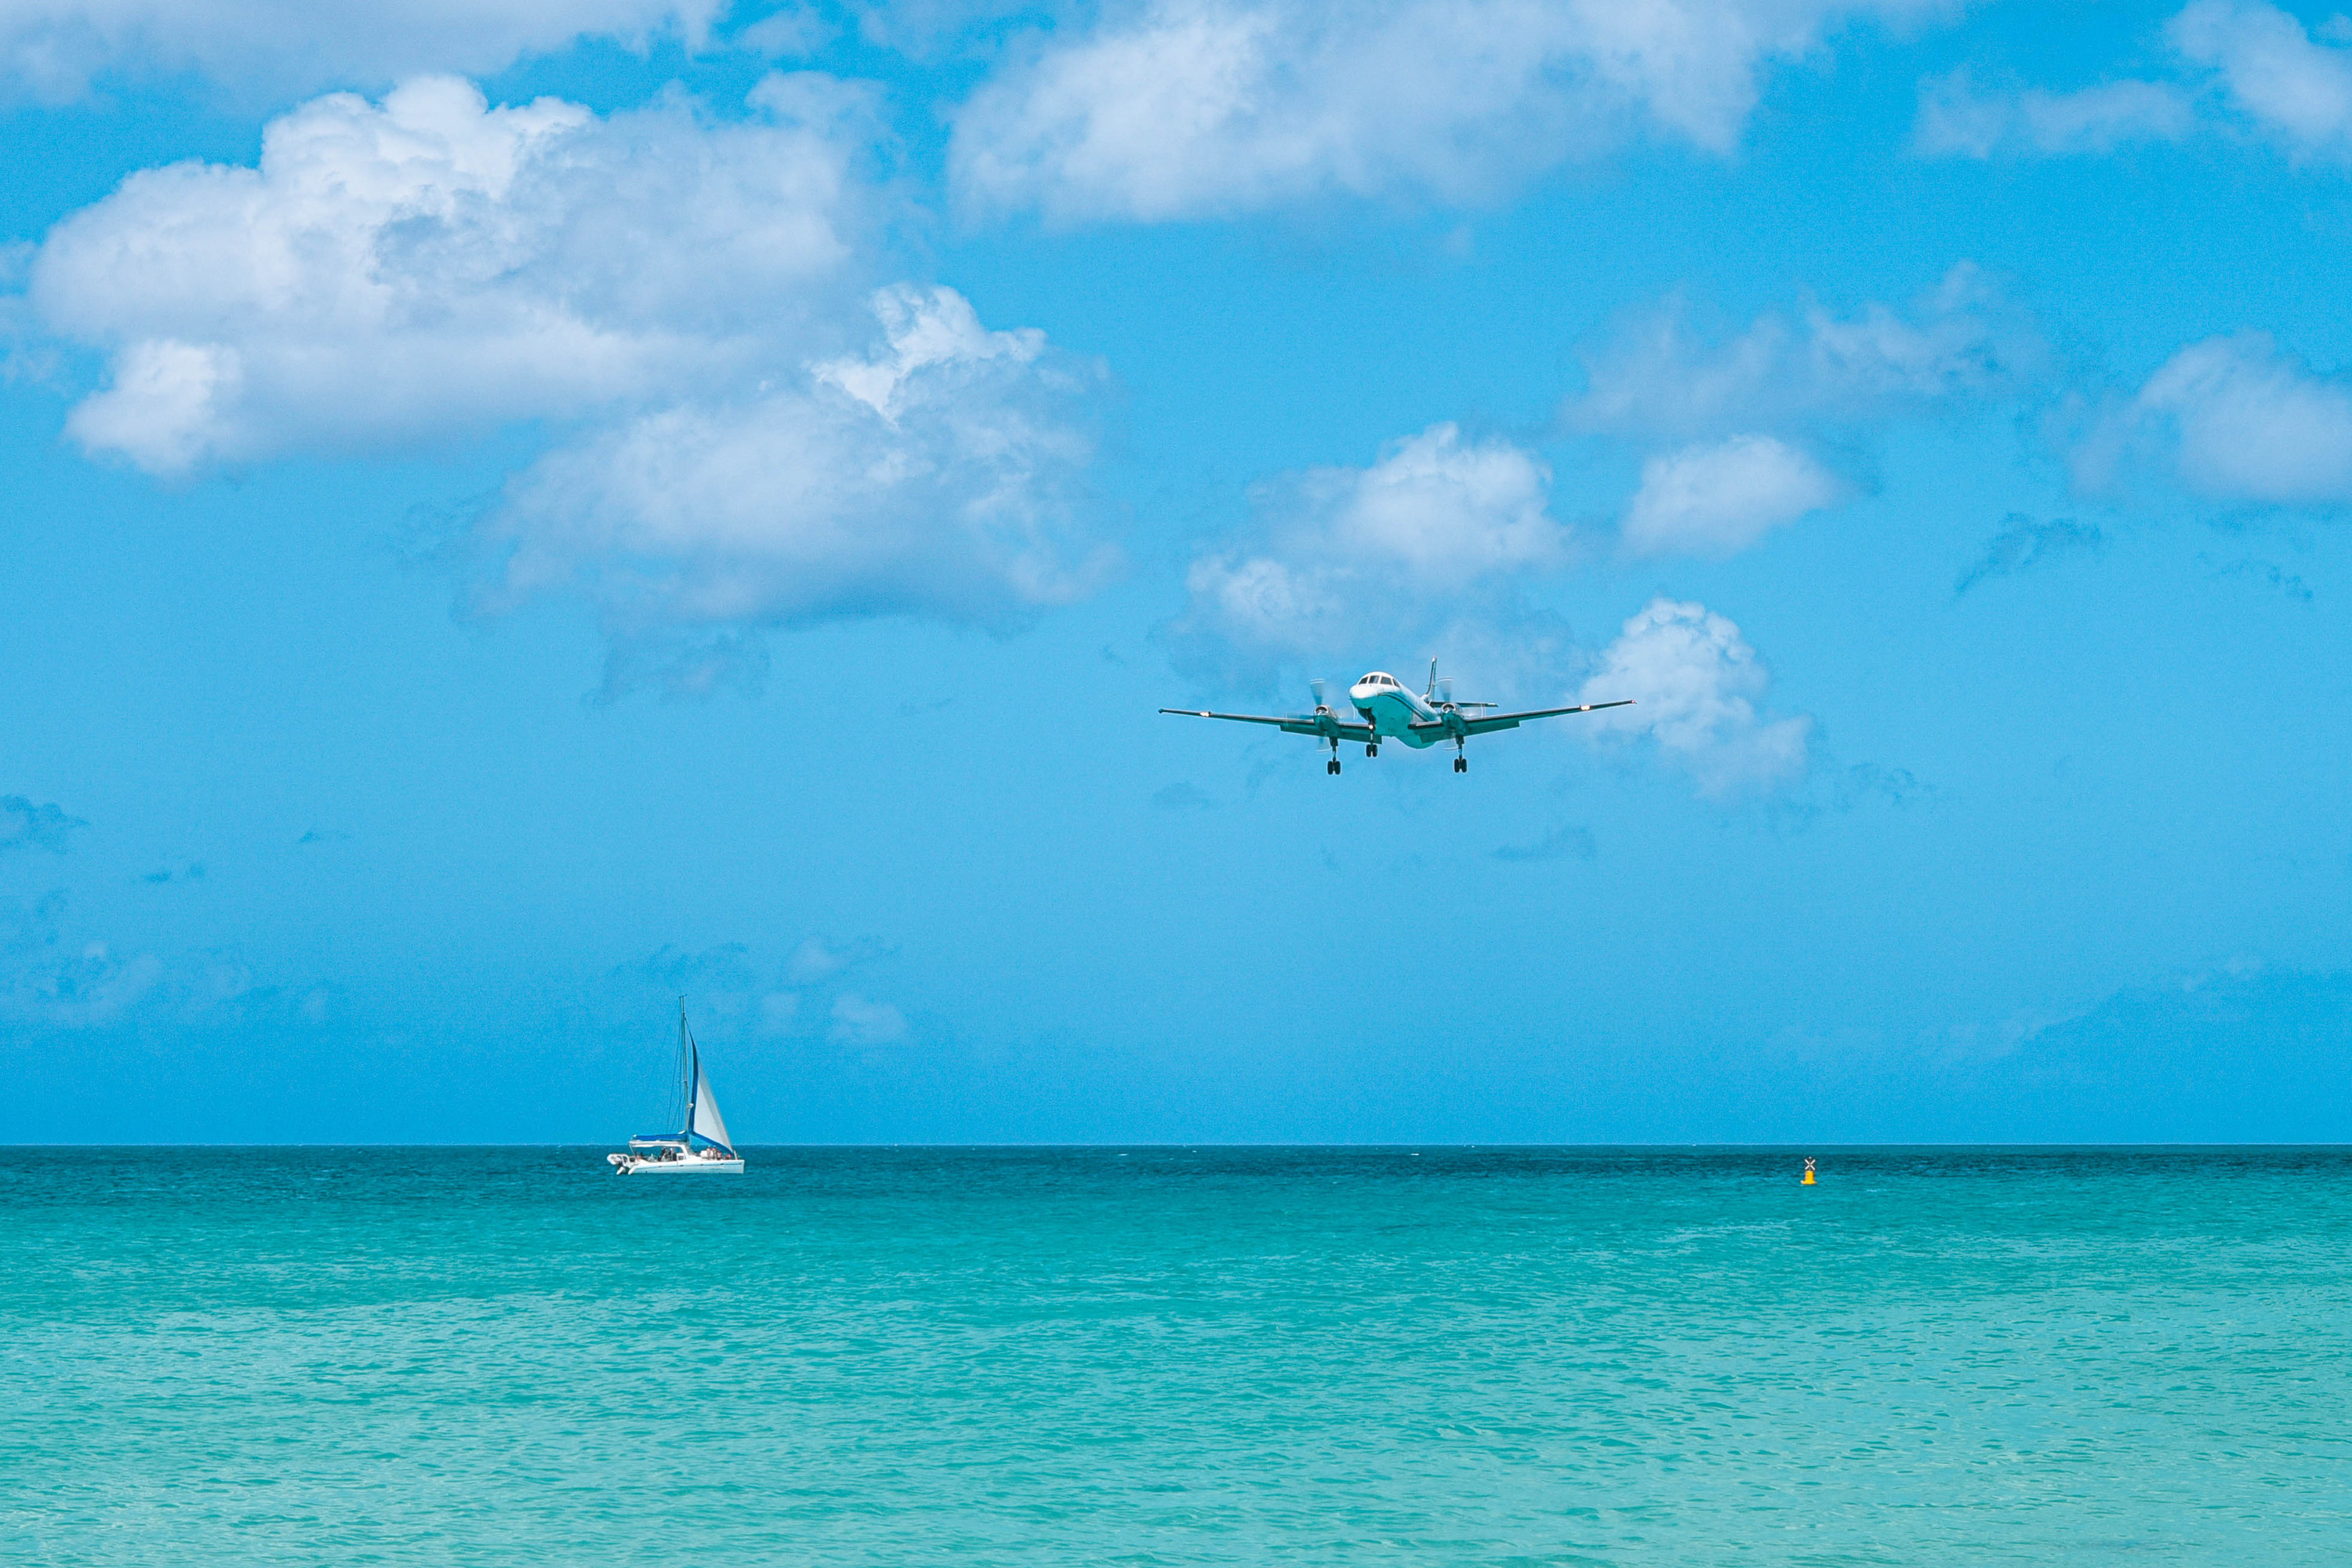 Plane landing on a small Caribbean island